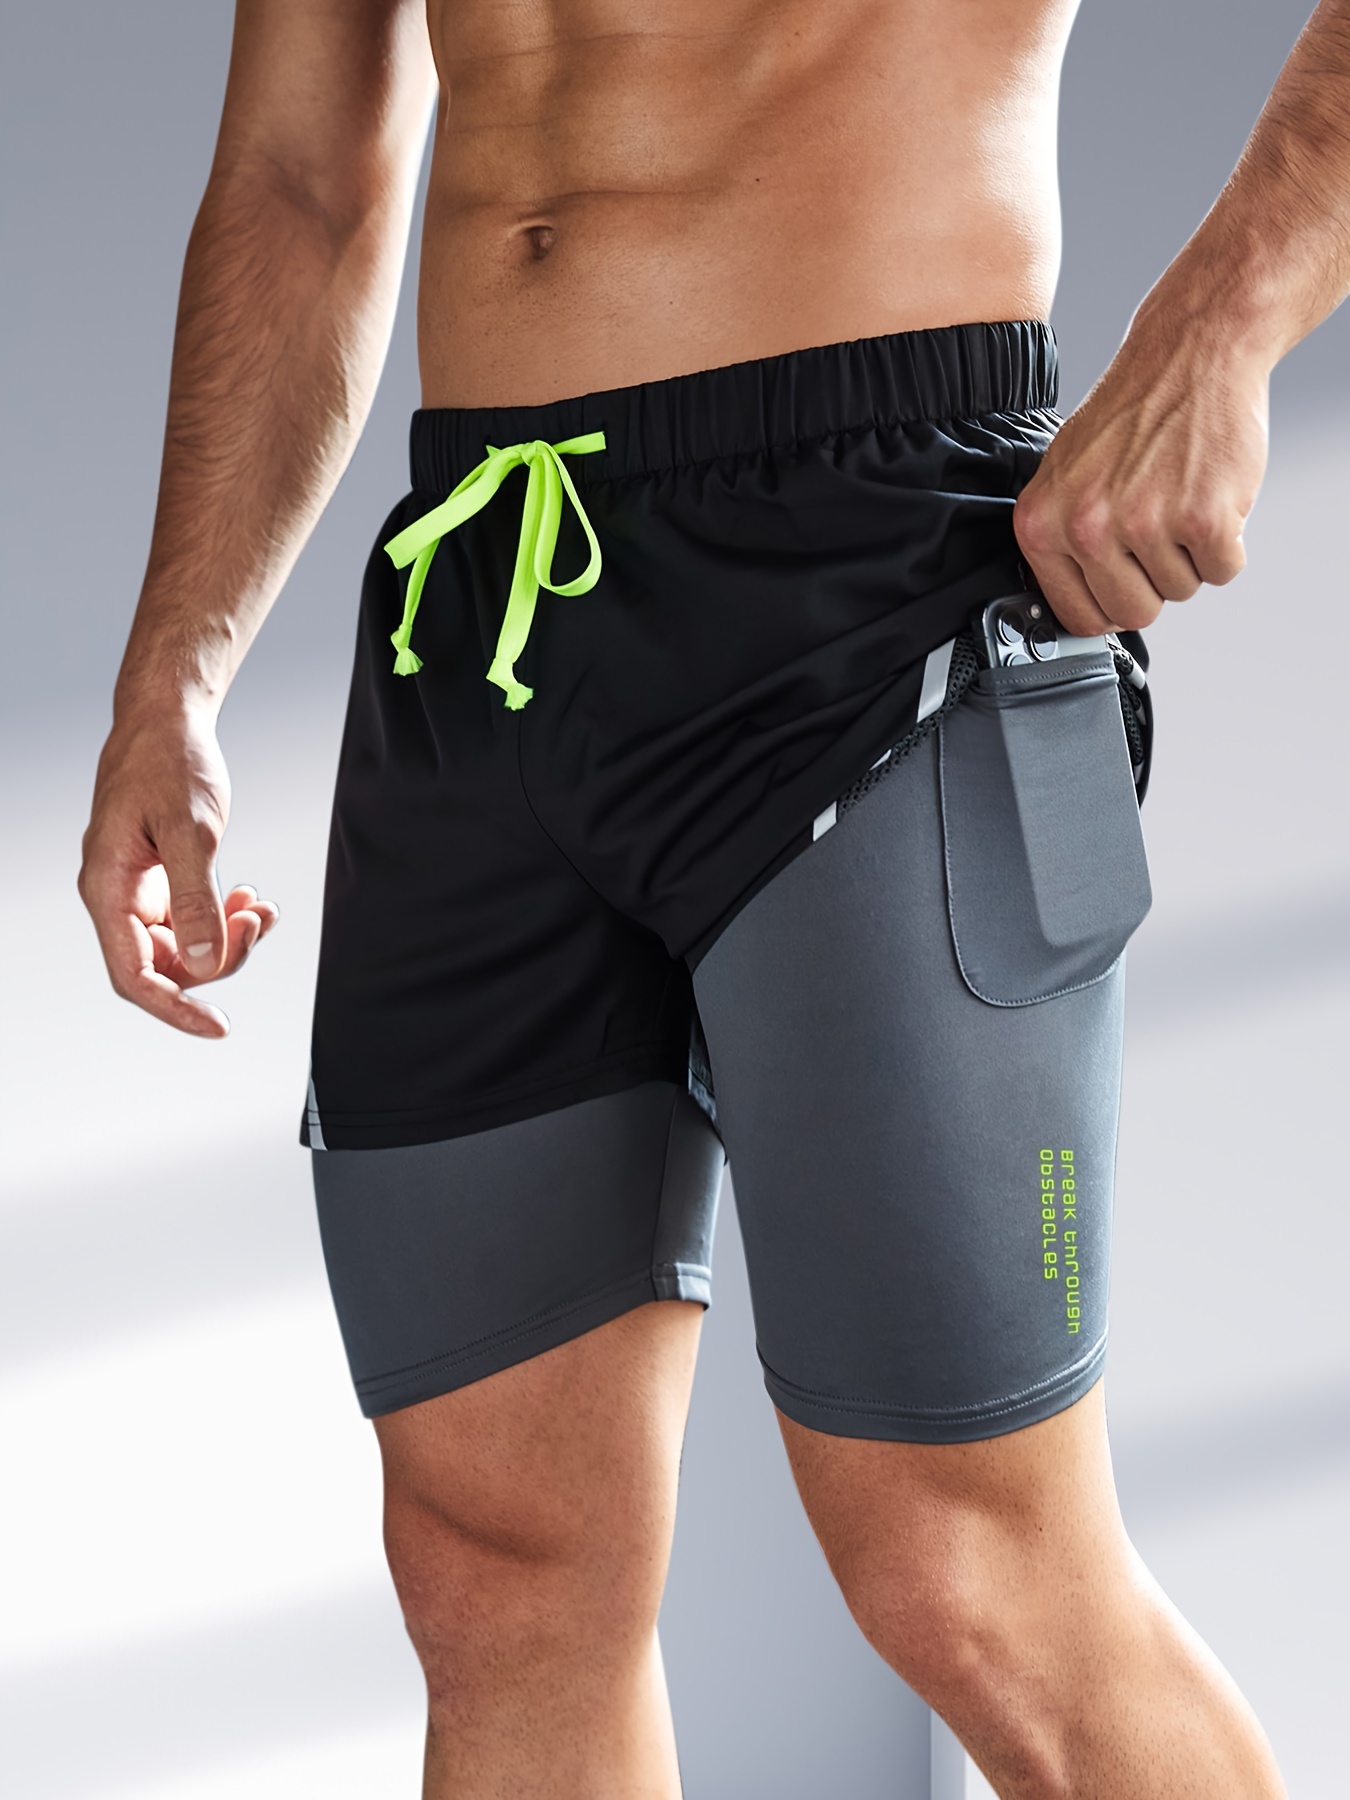 Printed men's running shorts with inner leggings and pockets - OCEAN B